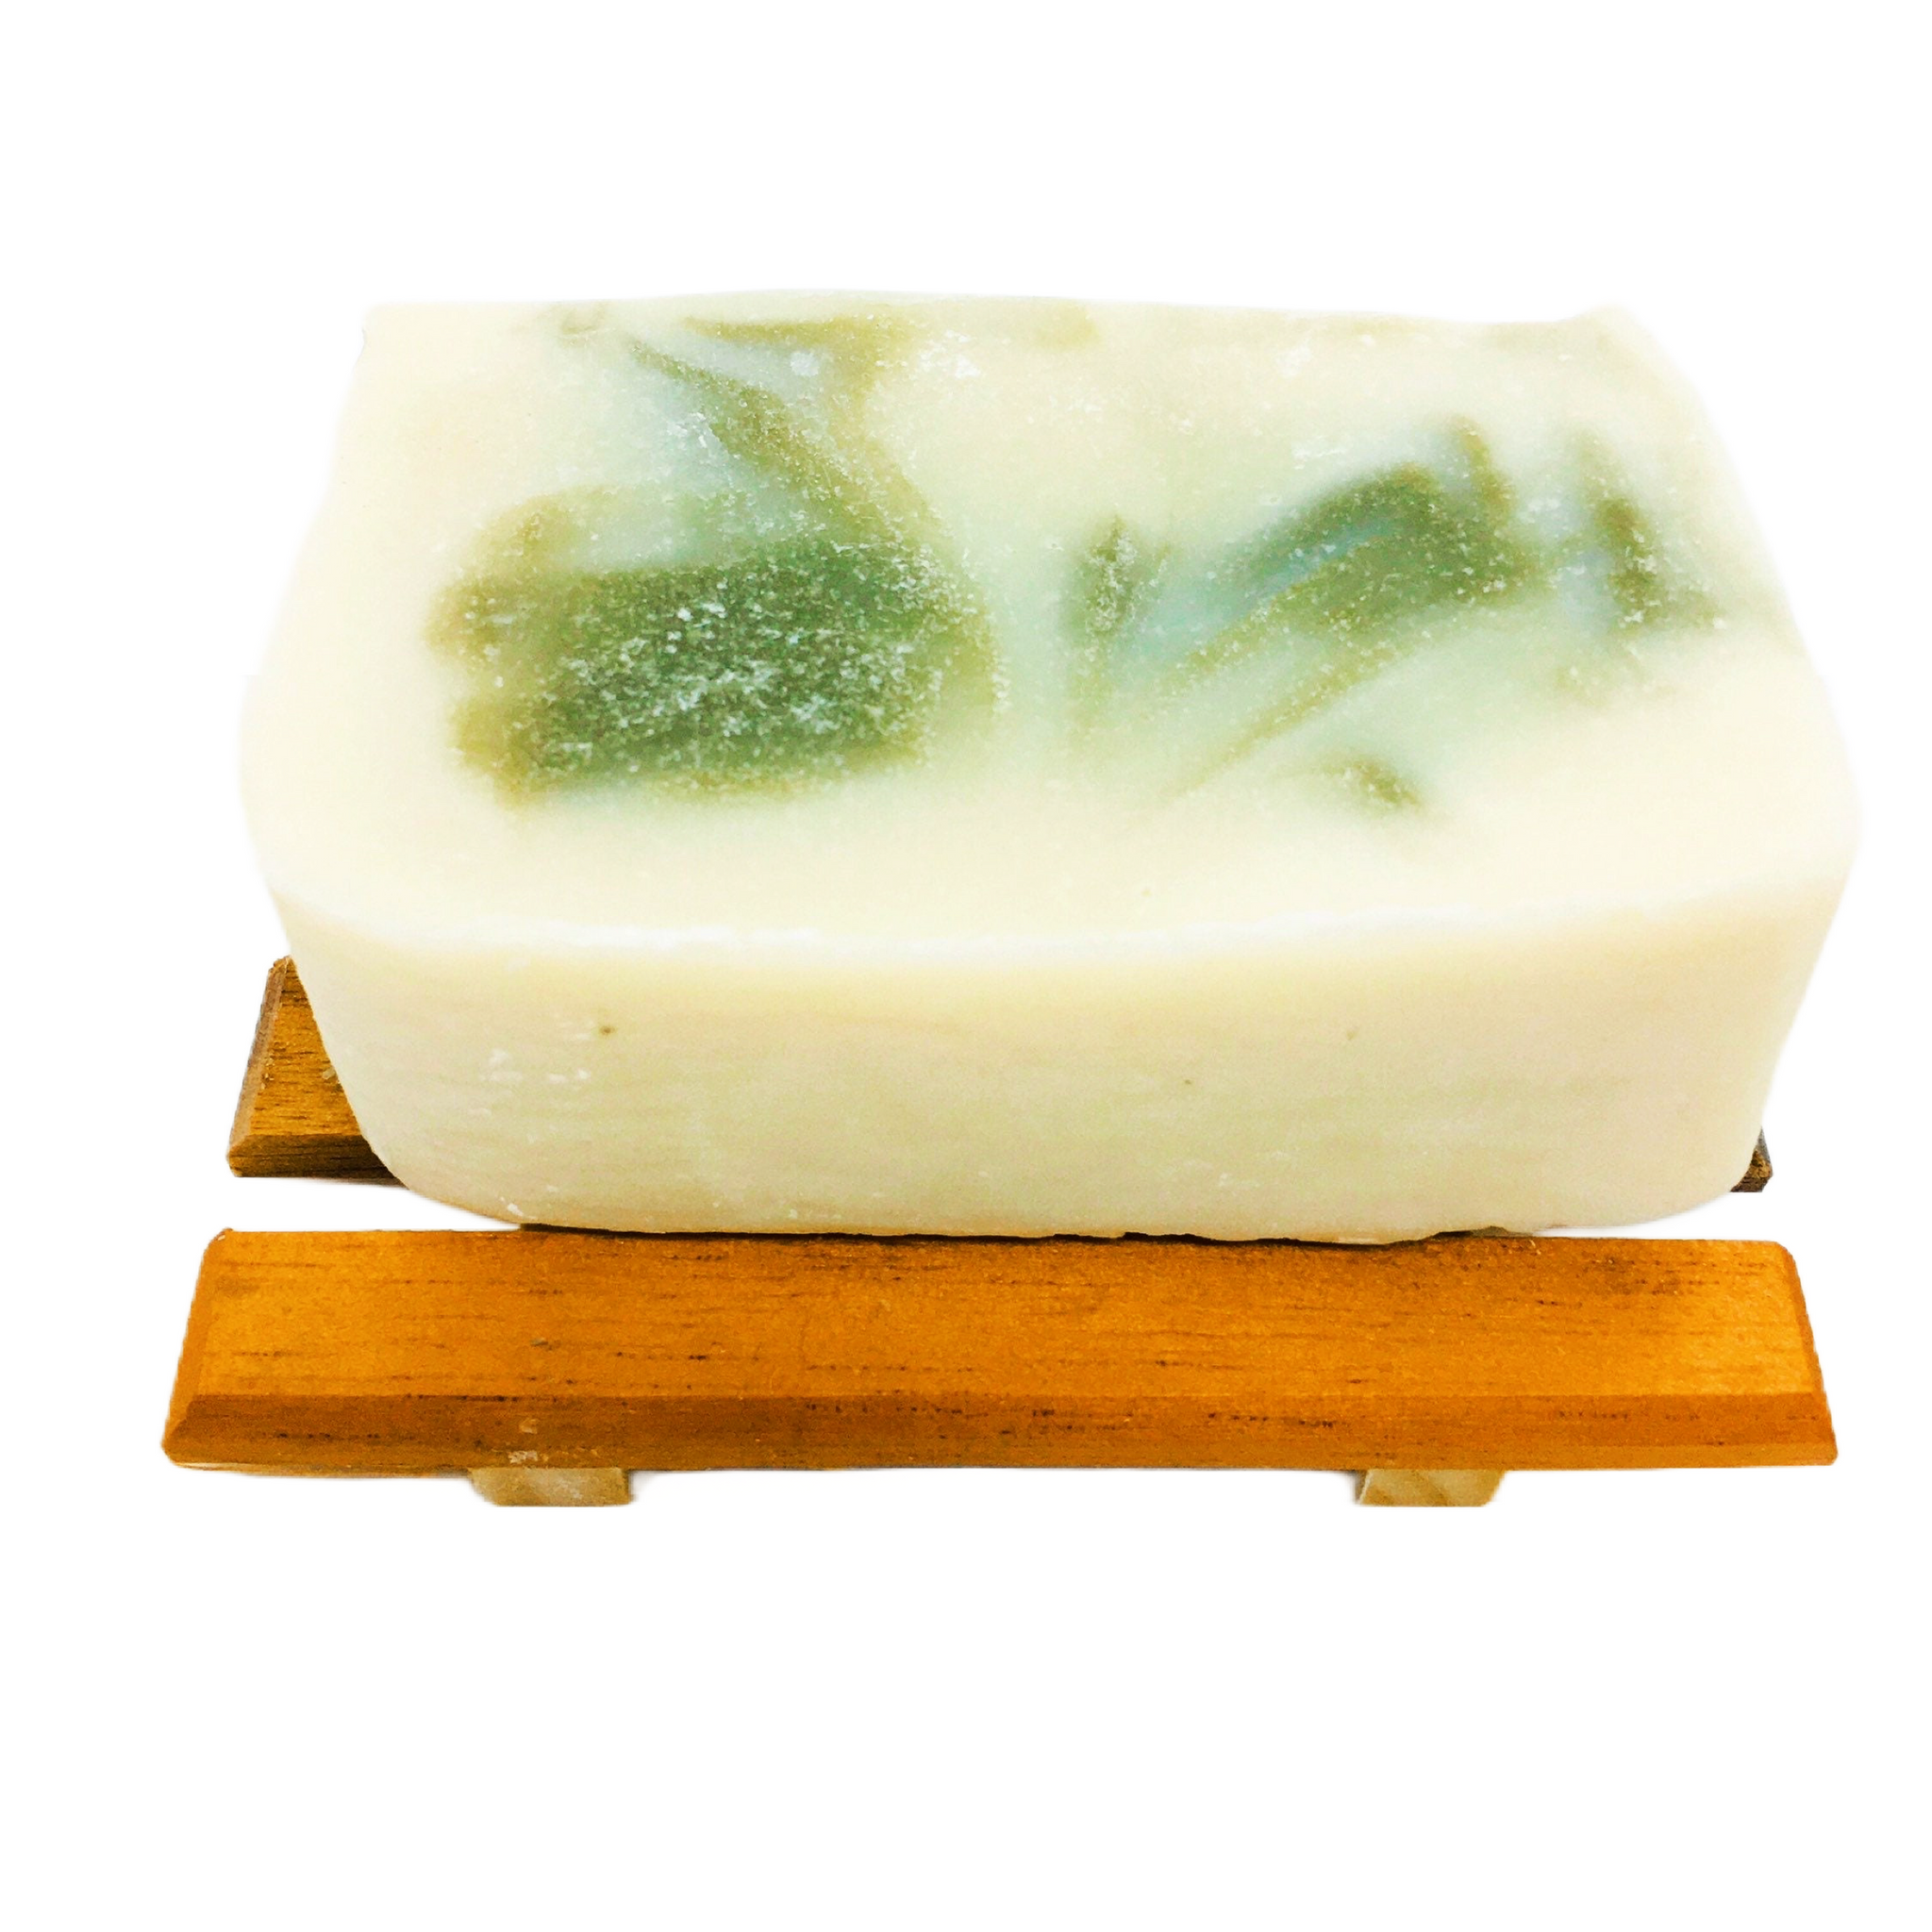 Shea Butter Almond Herbal Soap